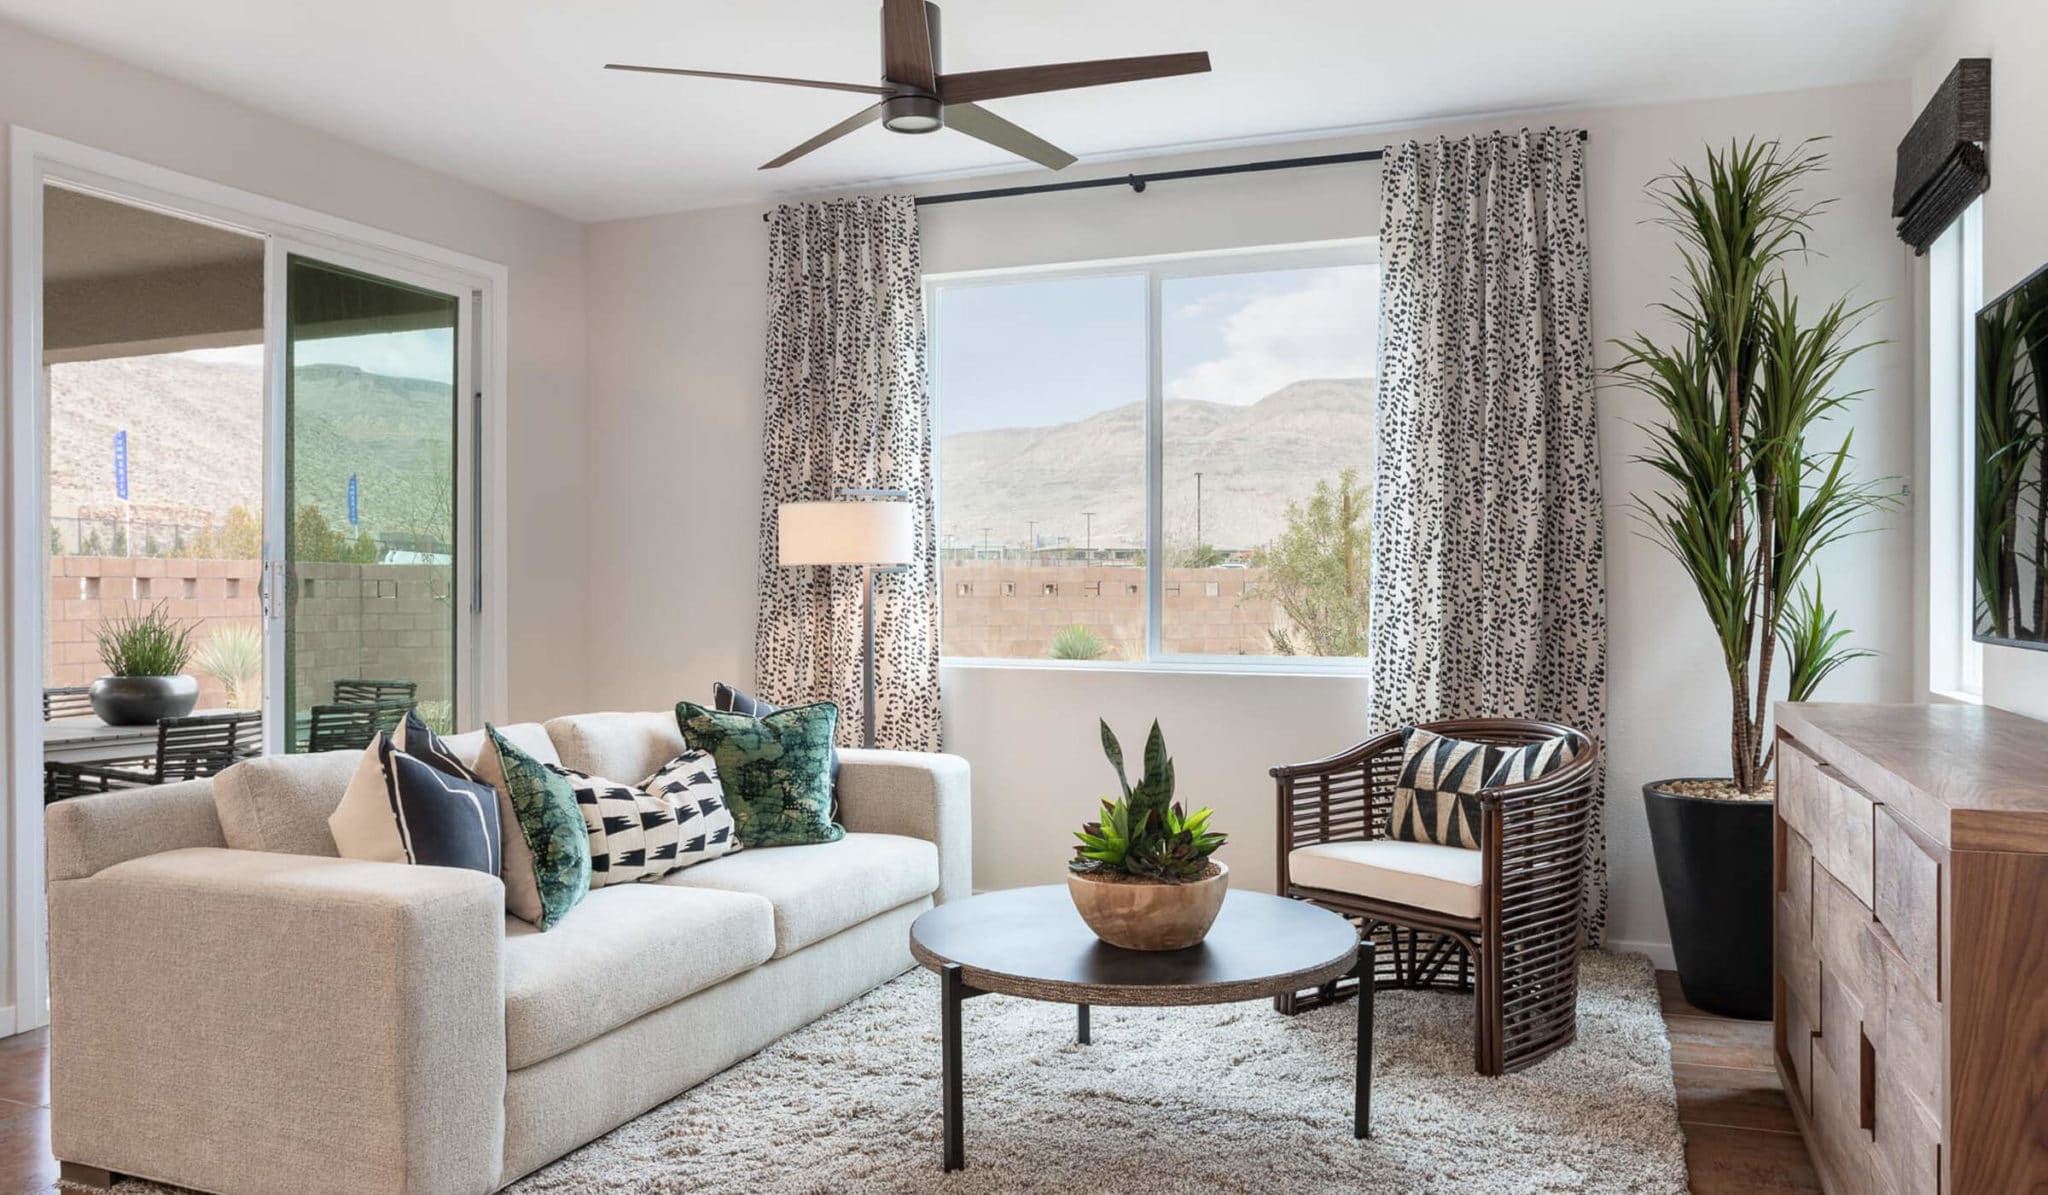 Living Room in Plan 3 Model in Jade Ridge by Taylor Morrison in The Cliffs in Summerlin